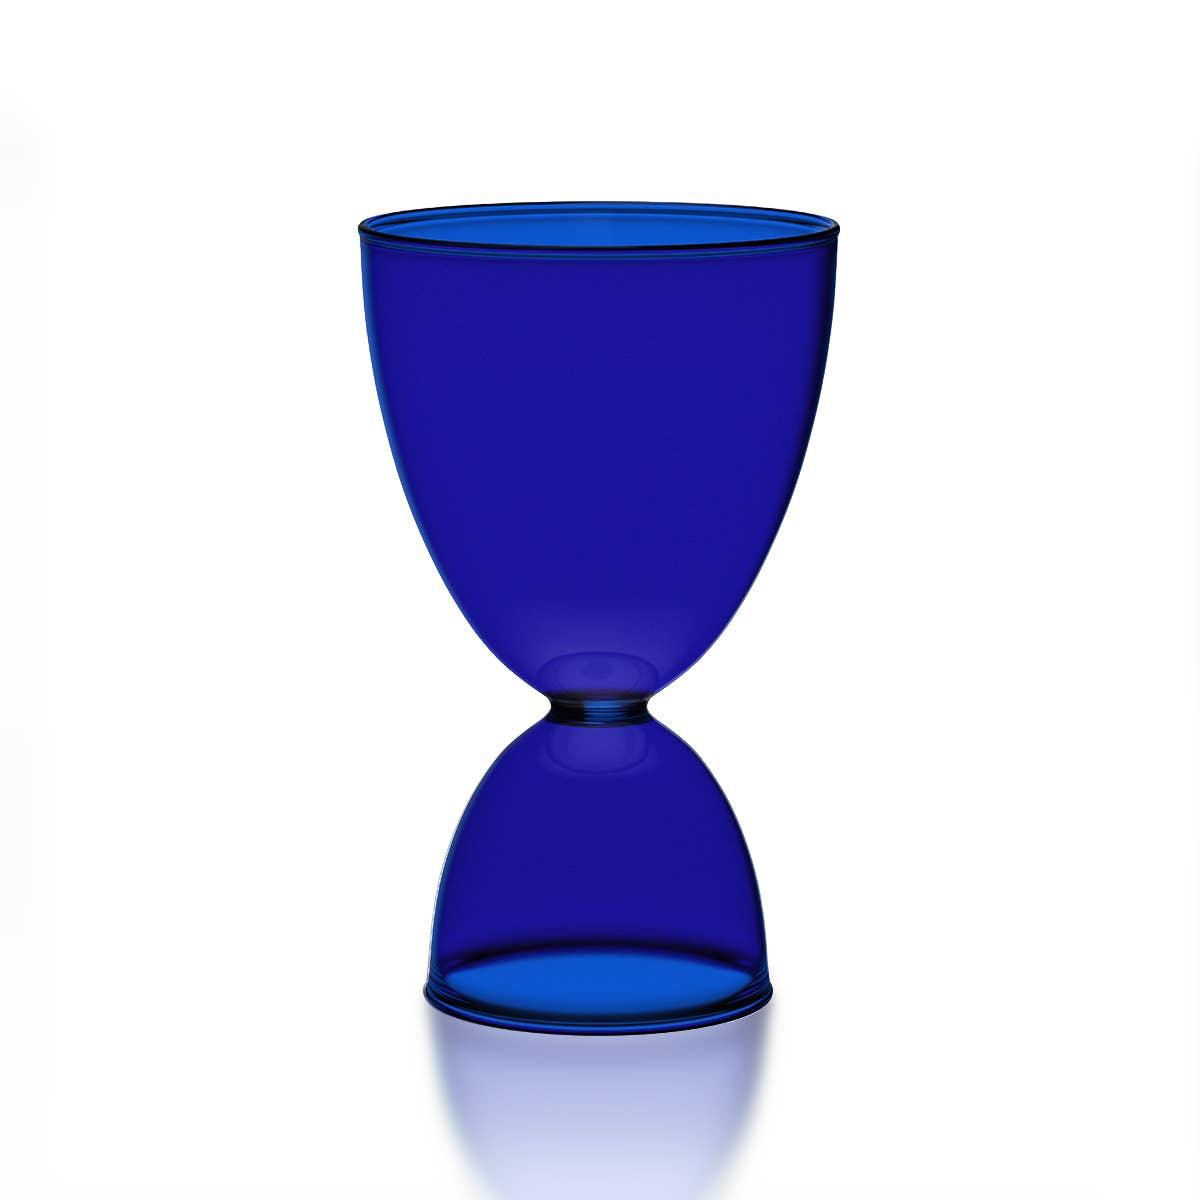 Classic Cup - Dark Blue by Mamo - Haven